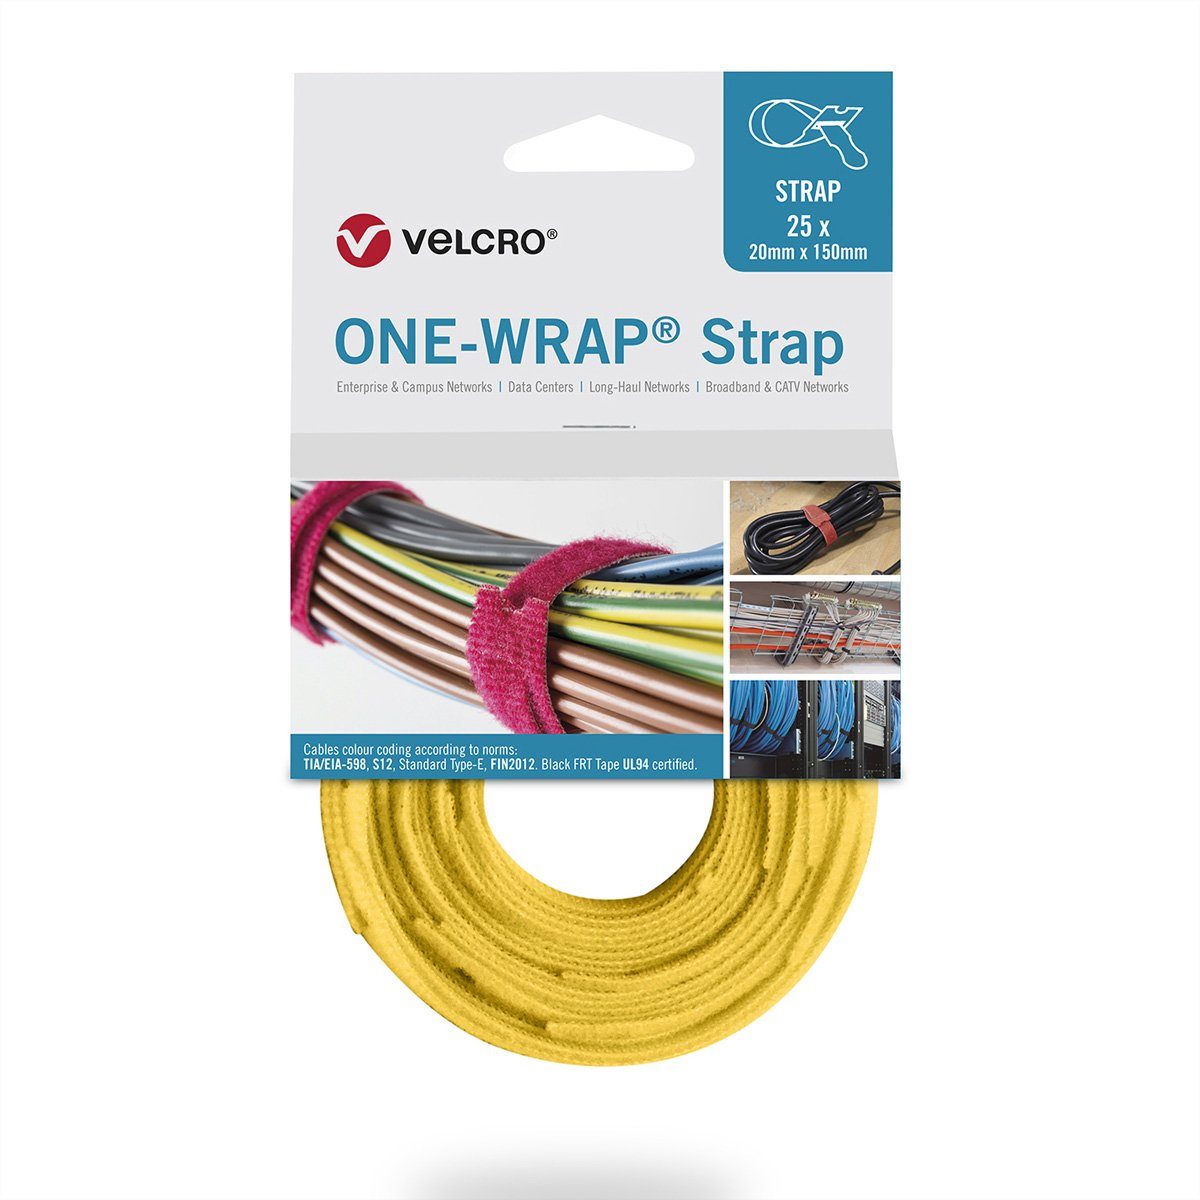 VELCRO Kabelbinder One Wrap® Strap 20mm x 150mm, 25 Stück